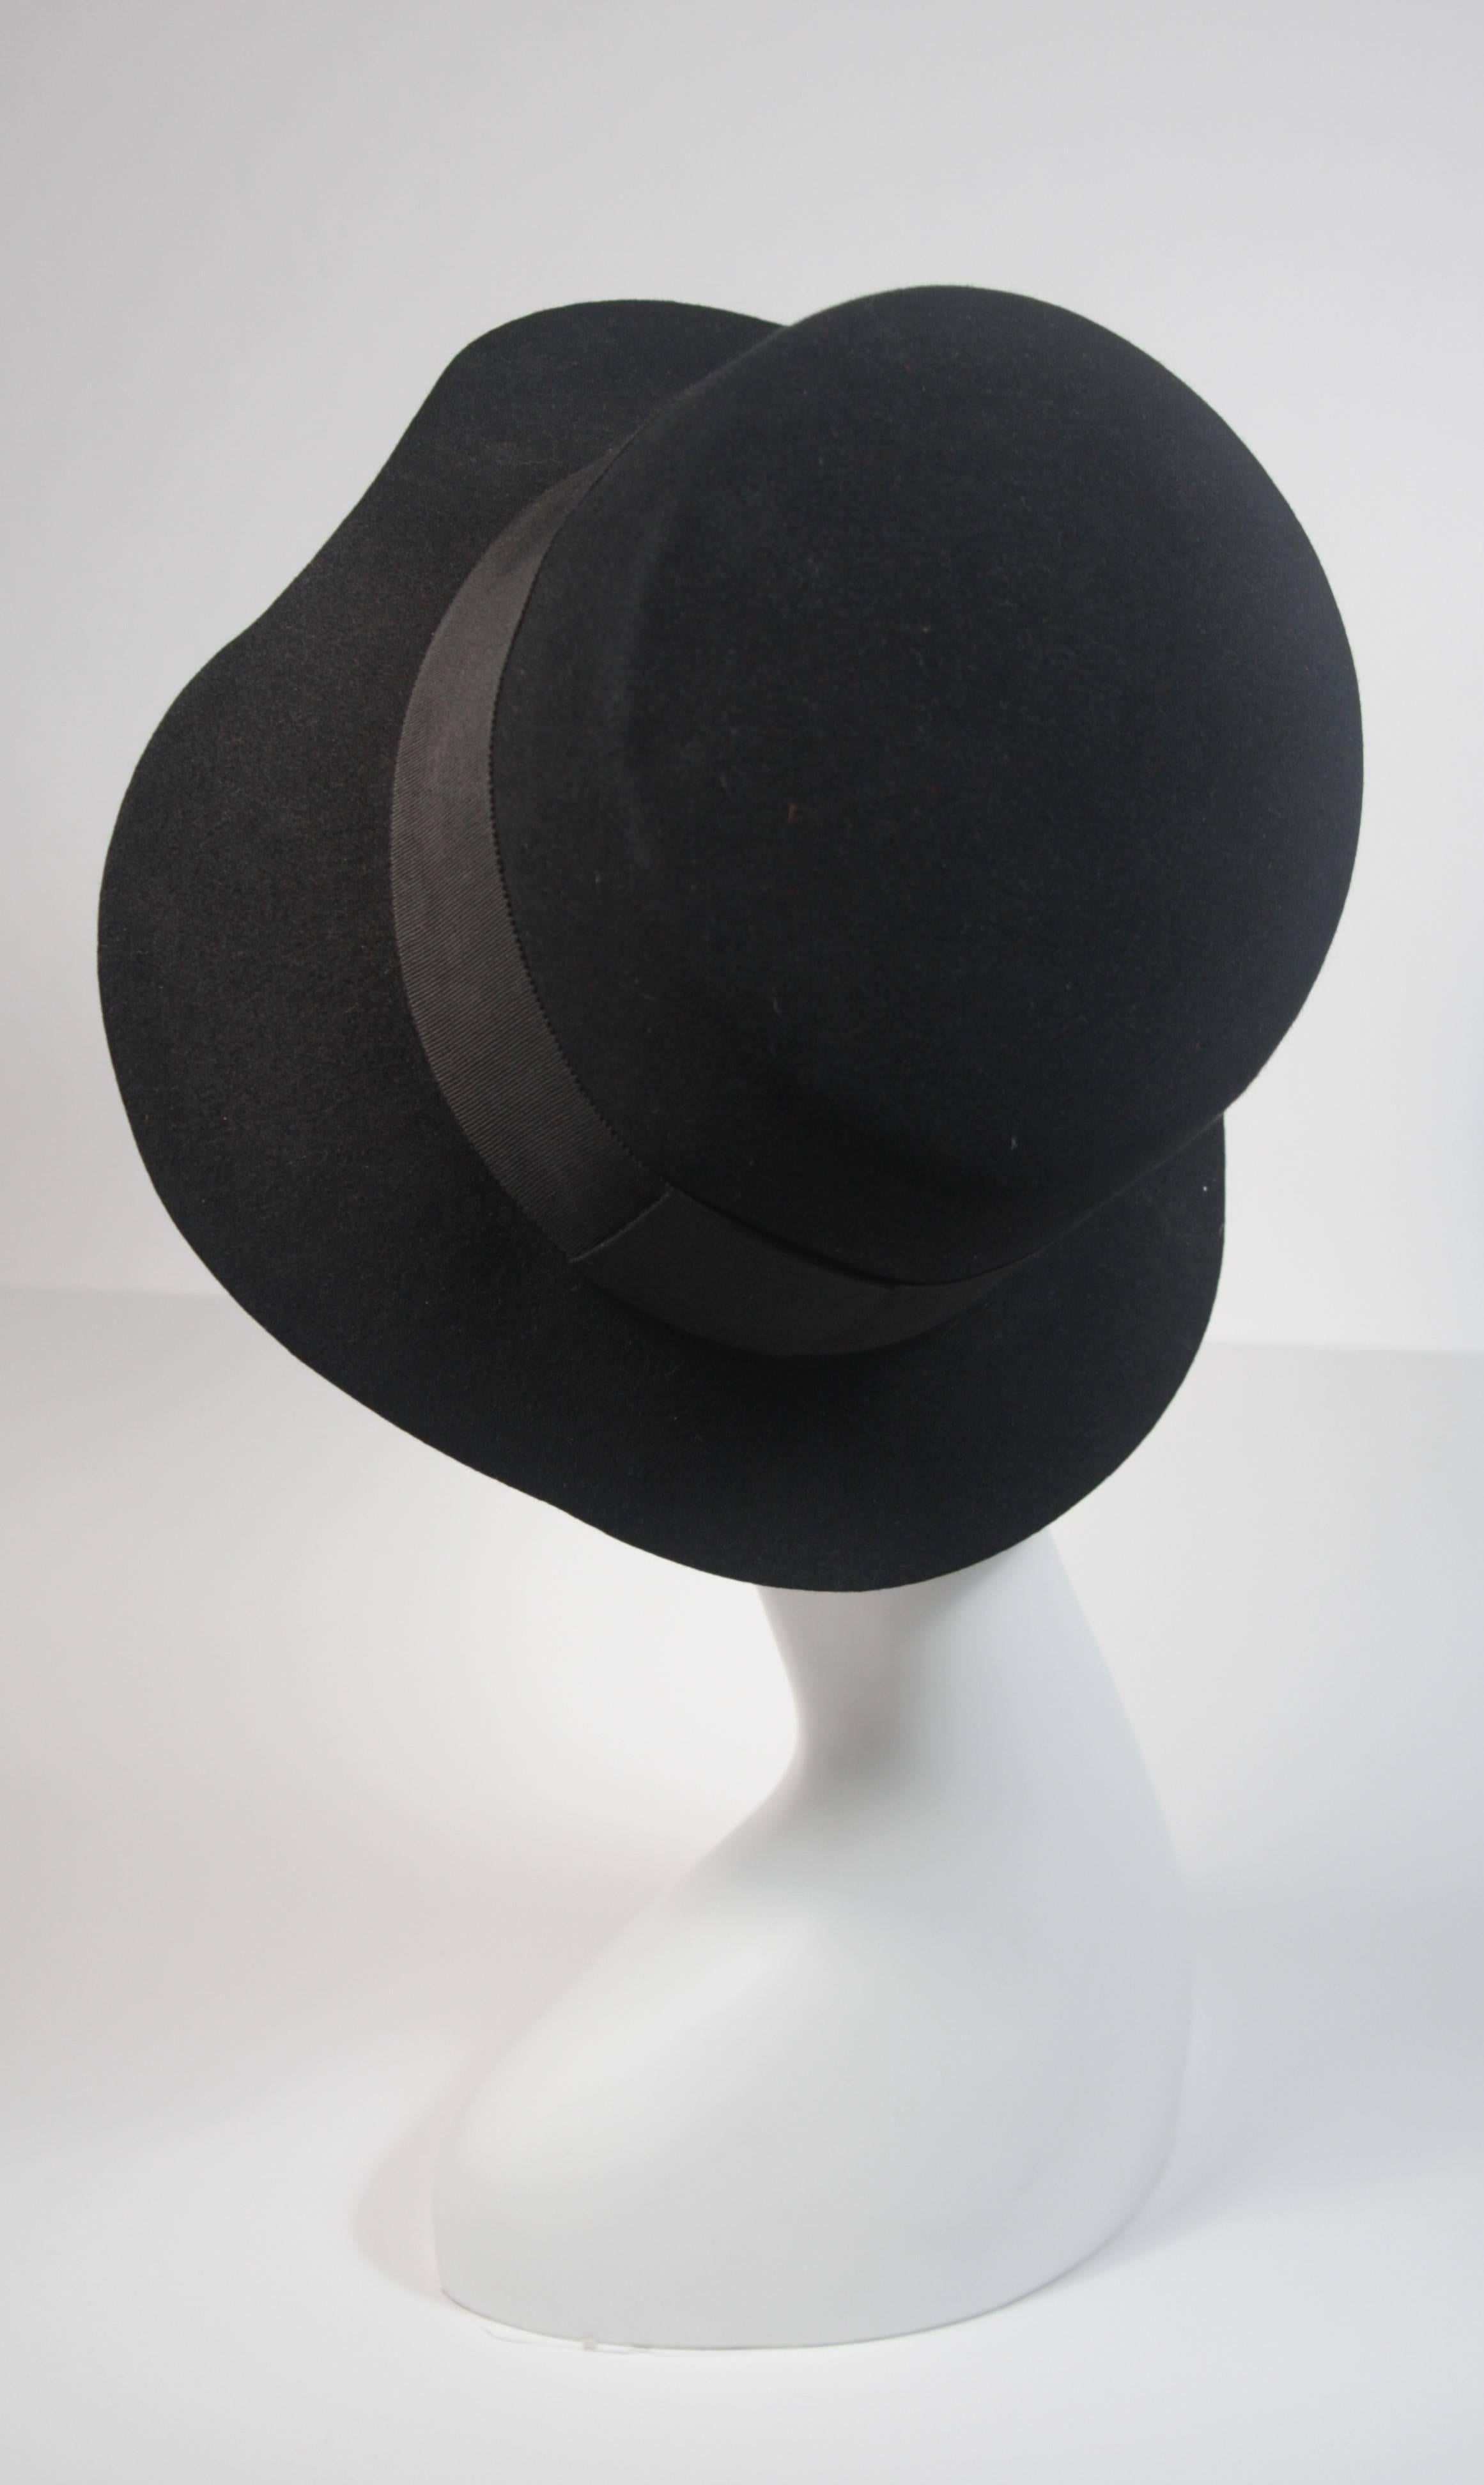 Yves Saint Laurent Rive Gauche 1980's Black Wool Felt Hat with Curved Brim 59 1